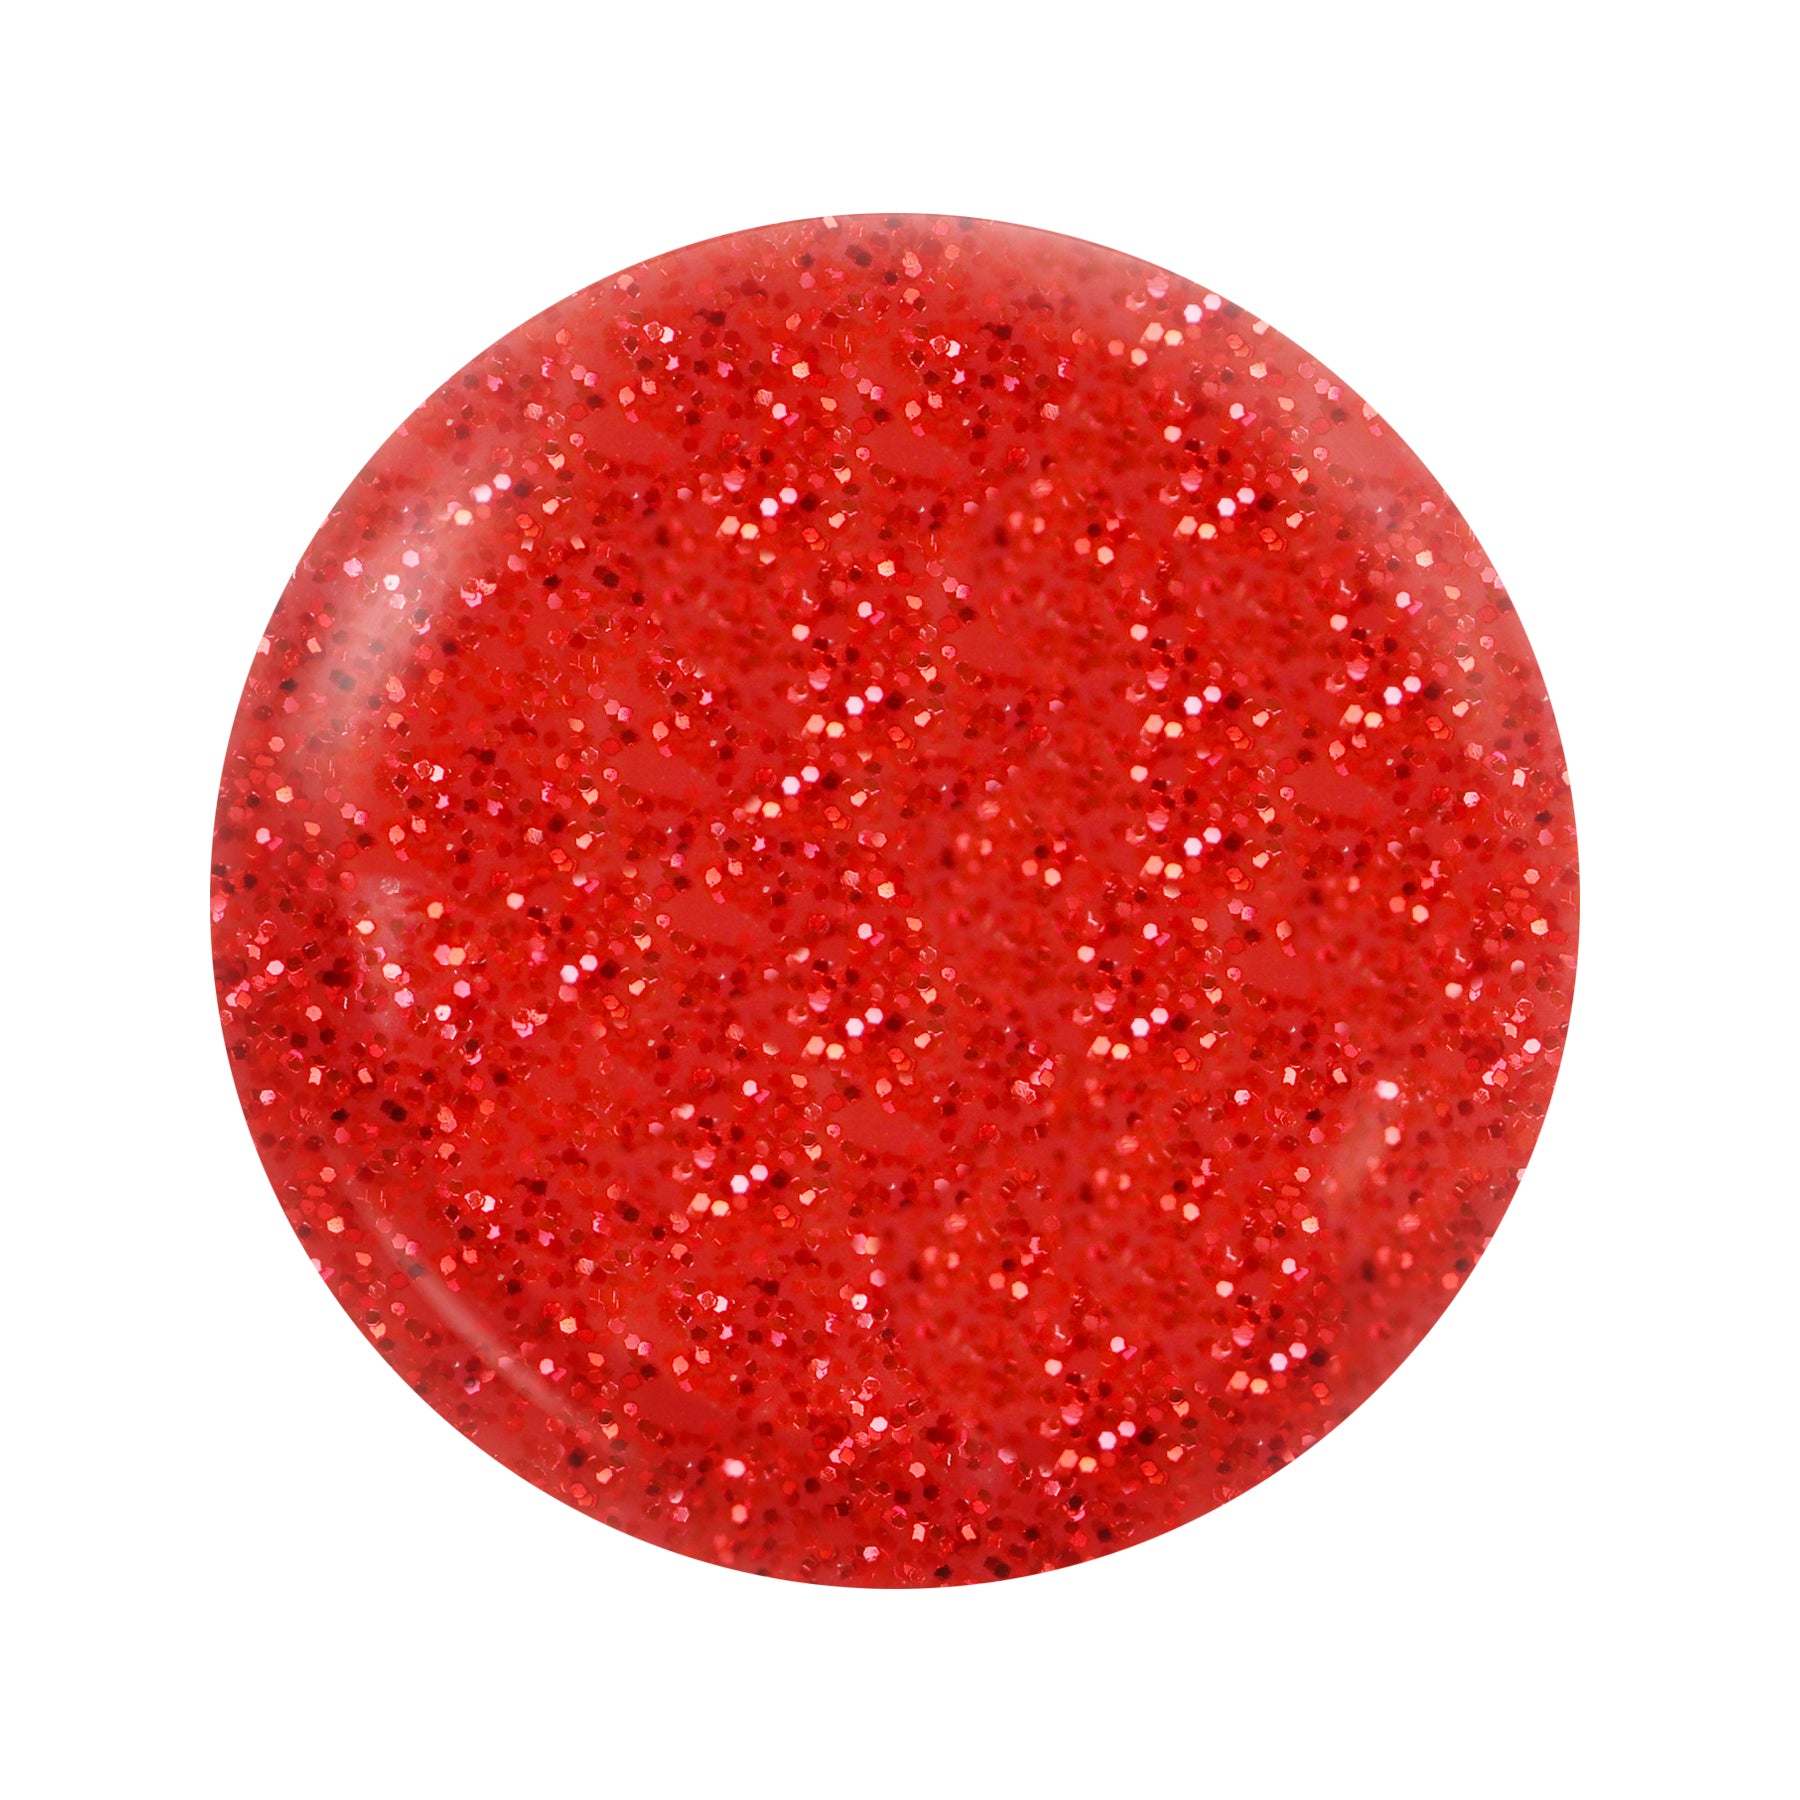 Noctis Red / Raspberry Metallic Powder, Nail Art Mcb05